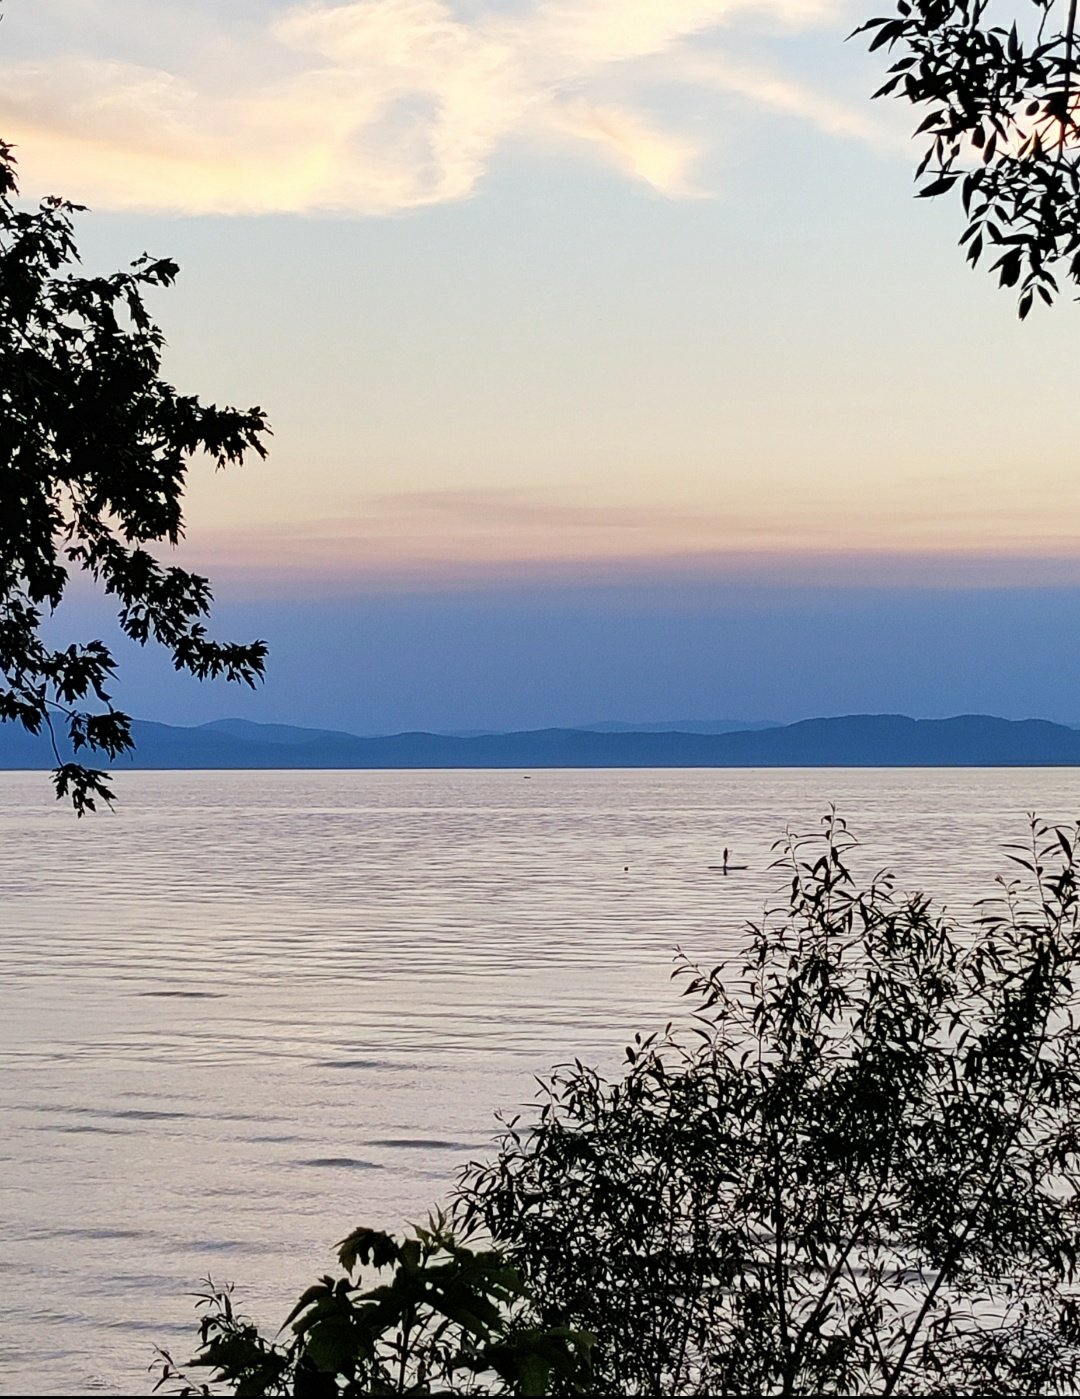 Sunset view of the Adirondack Mountains on Lake Champlain in Burlington, Vermont